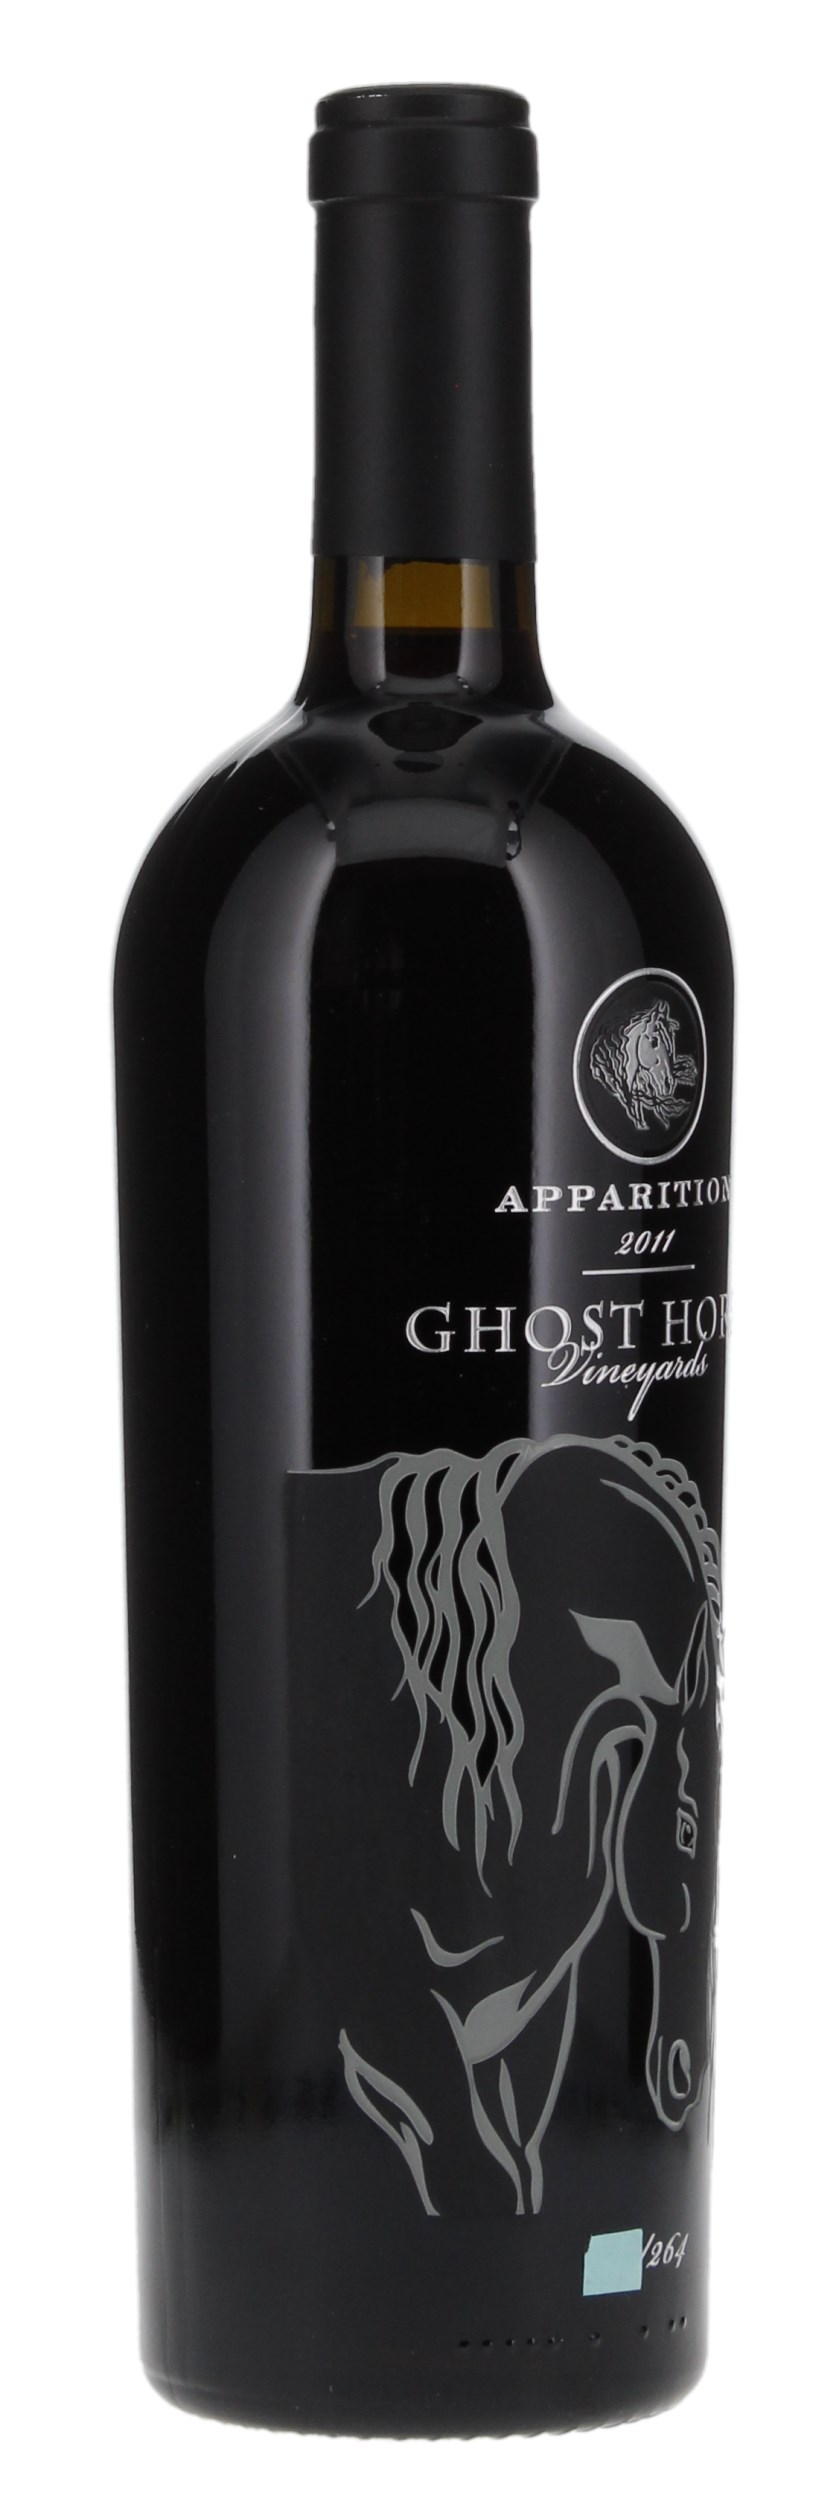 2011 Ghost Horse Vineyard Apparition Cabernet Sauvignon, 750ml